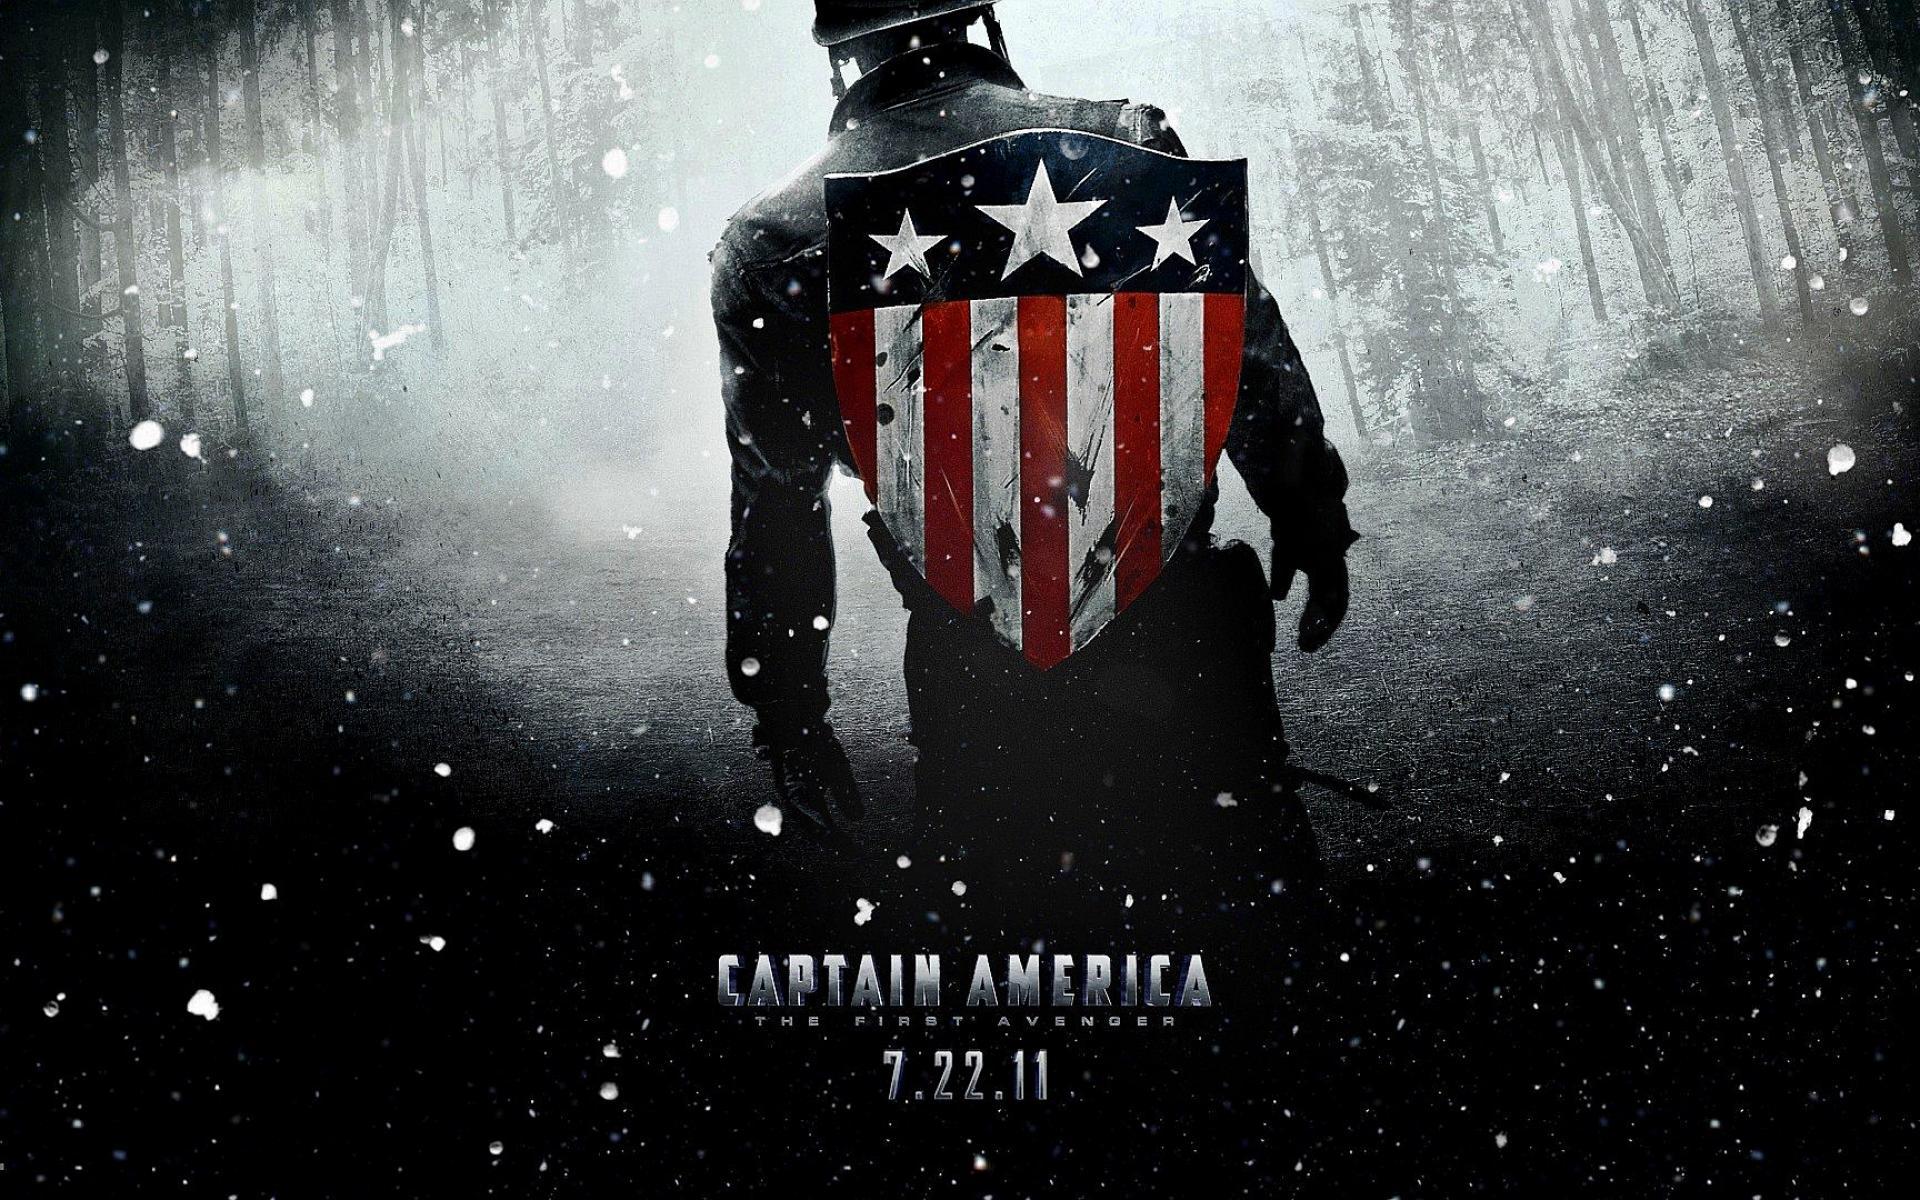 Captain America HD Wallpaper for desktop download